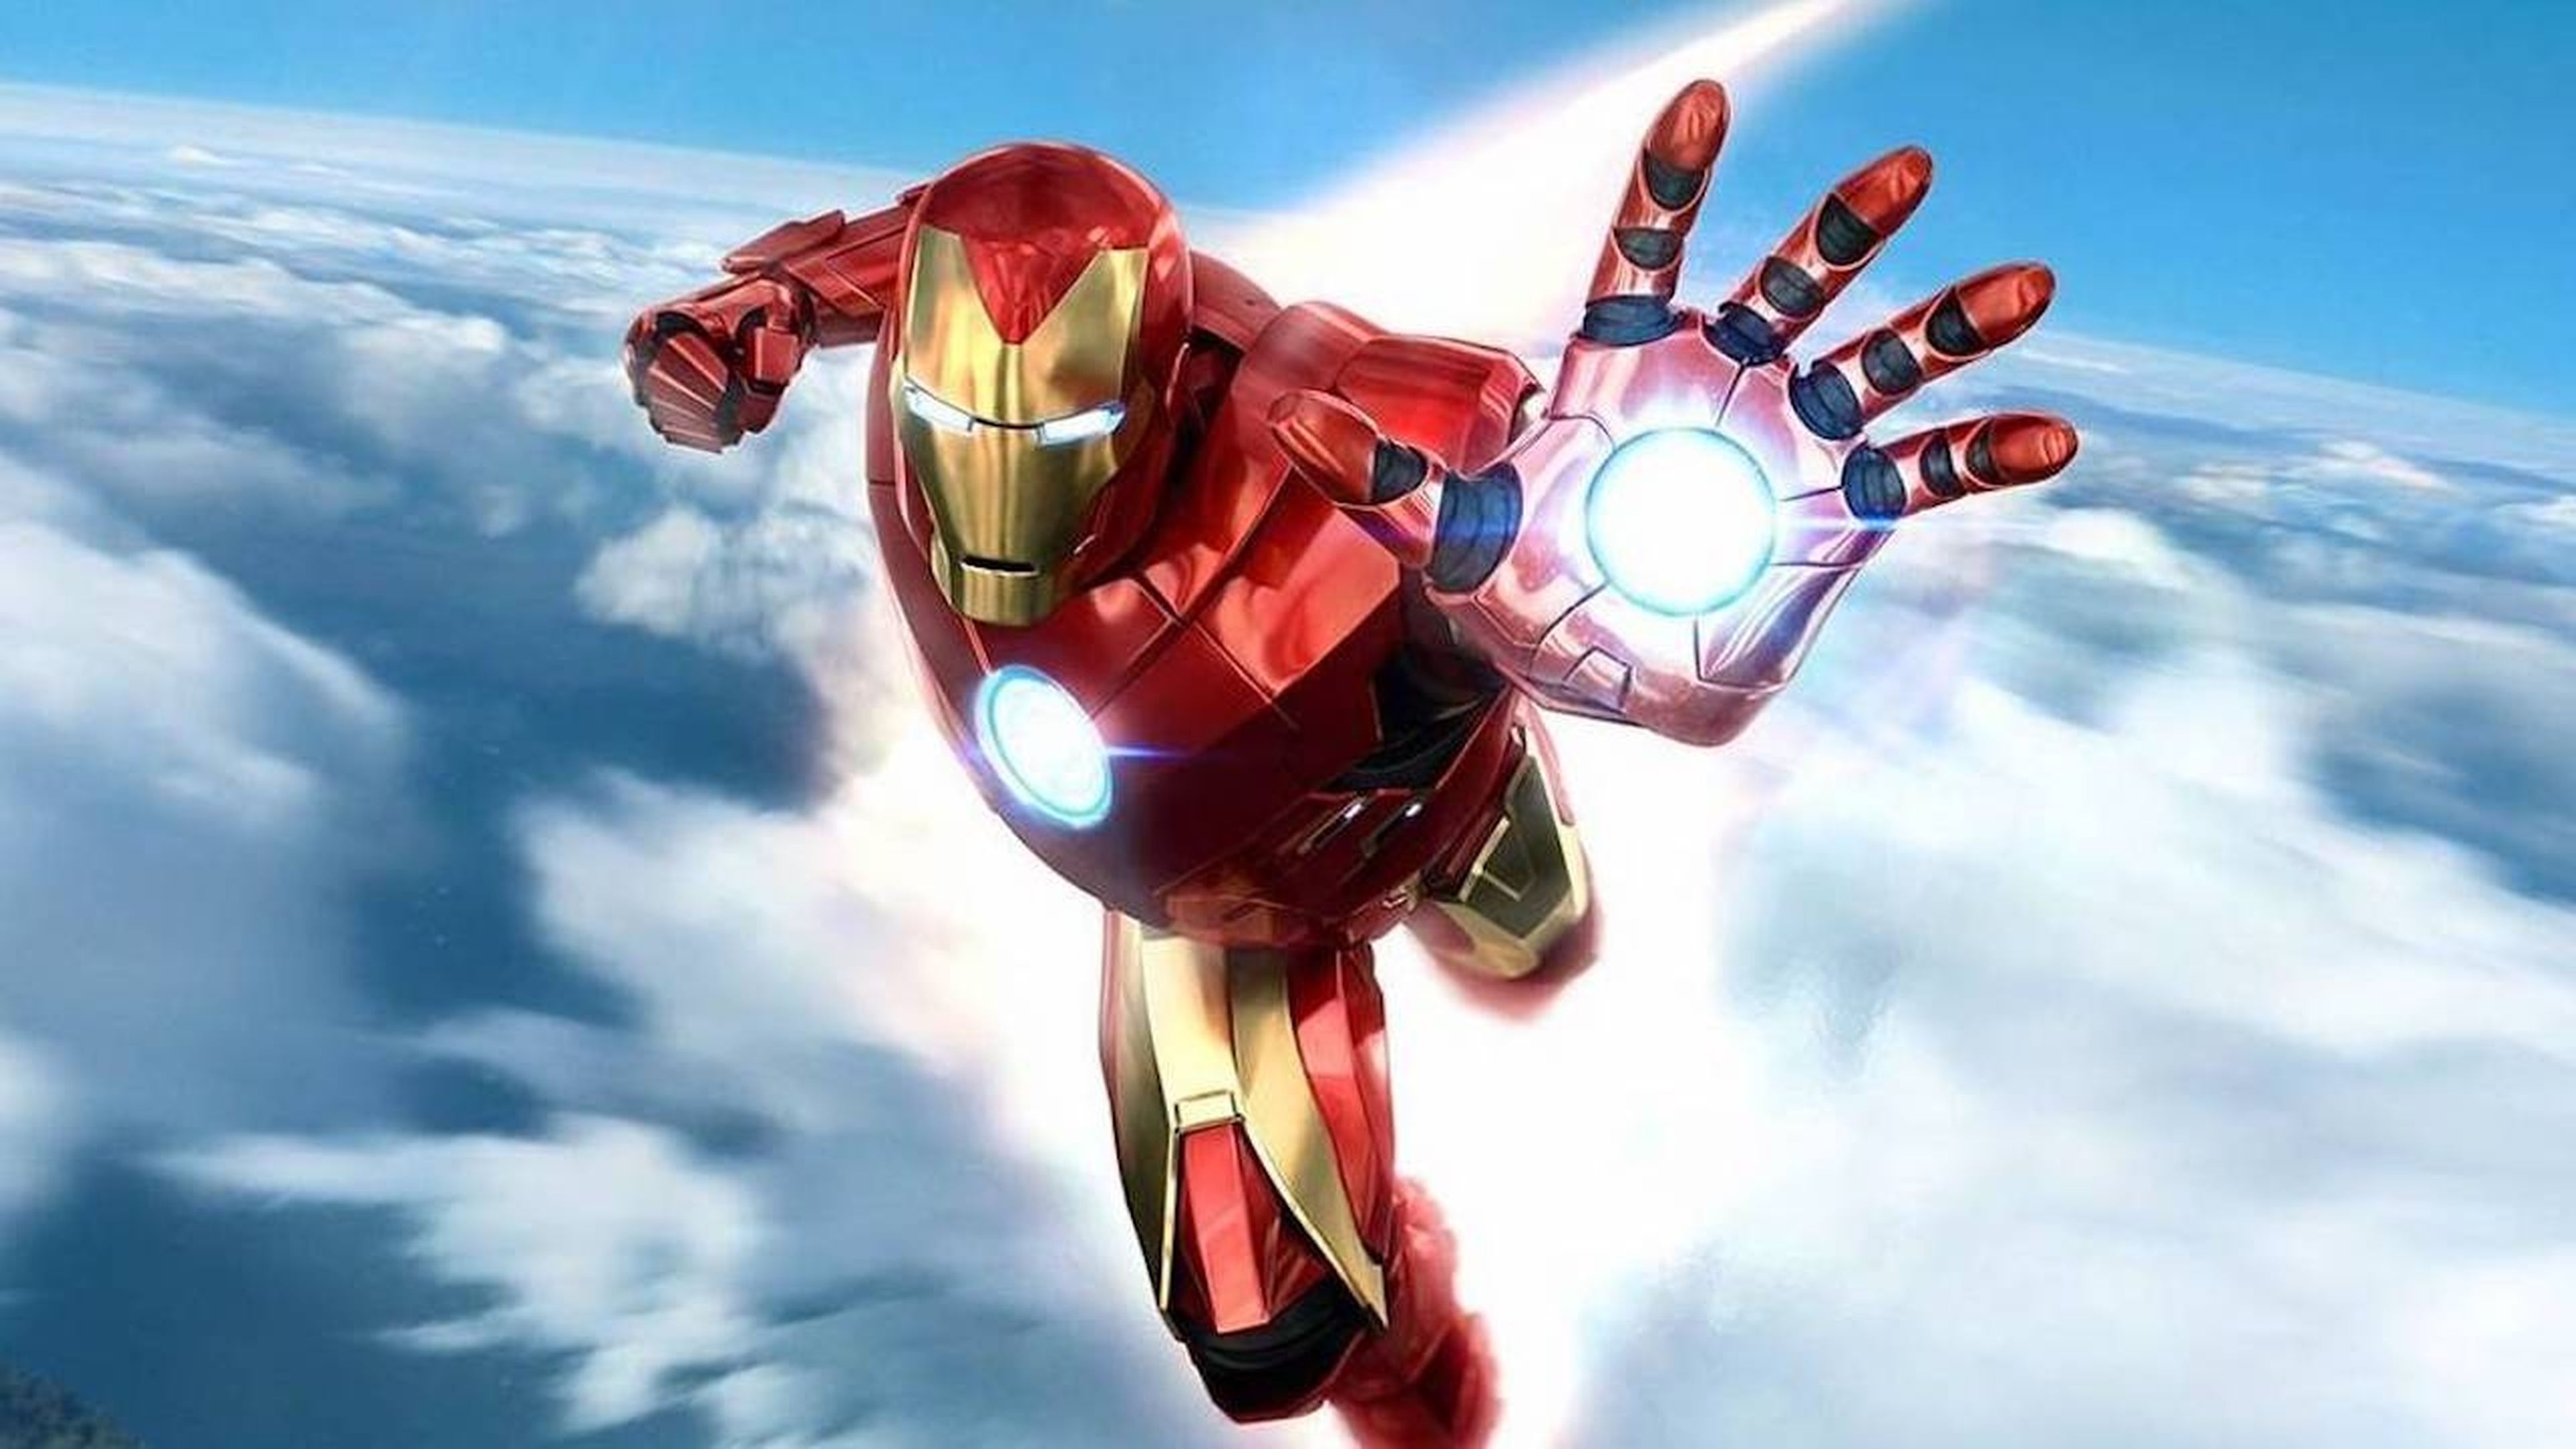 Iron-Man VR